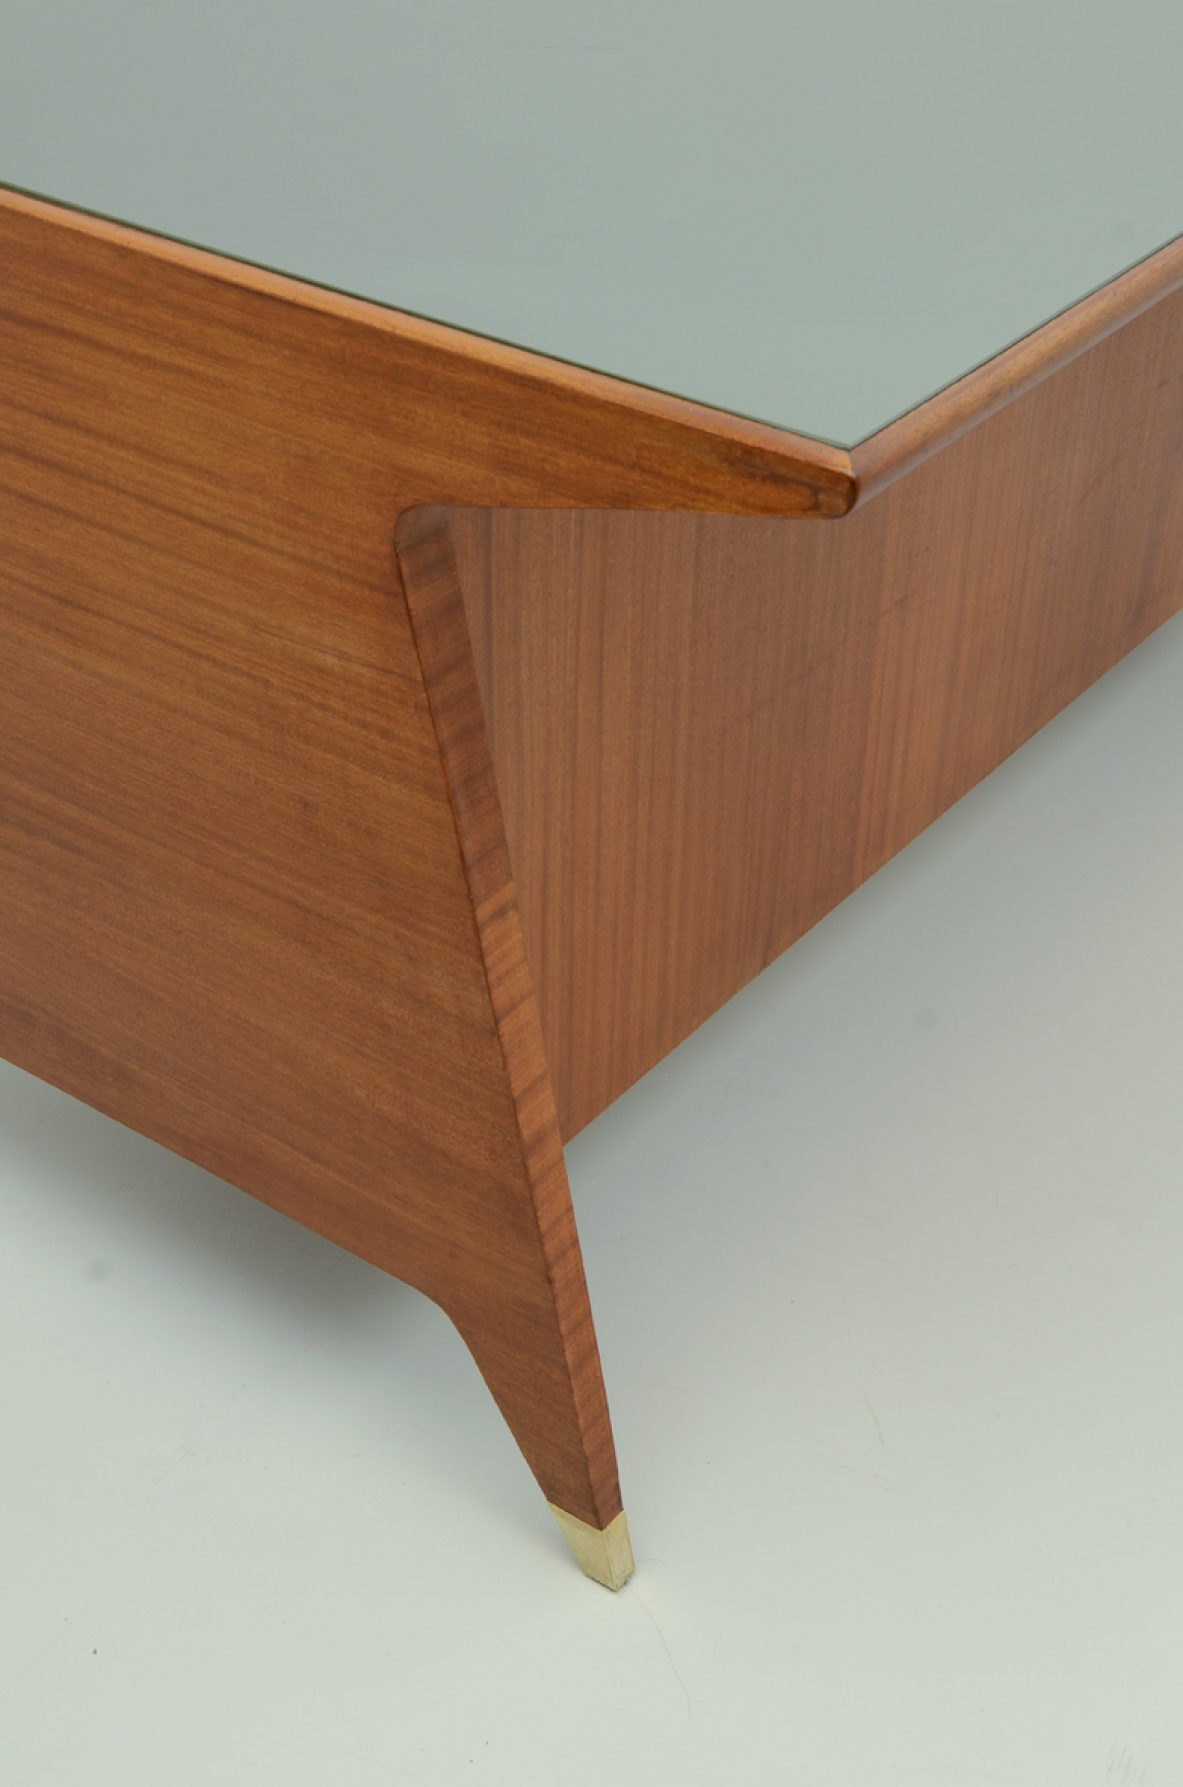 Gio Ponti, important executive desk in mahogany, Designed in 1952 for V.B.